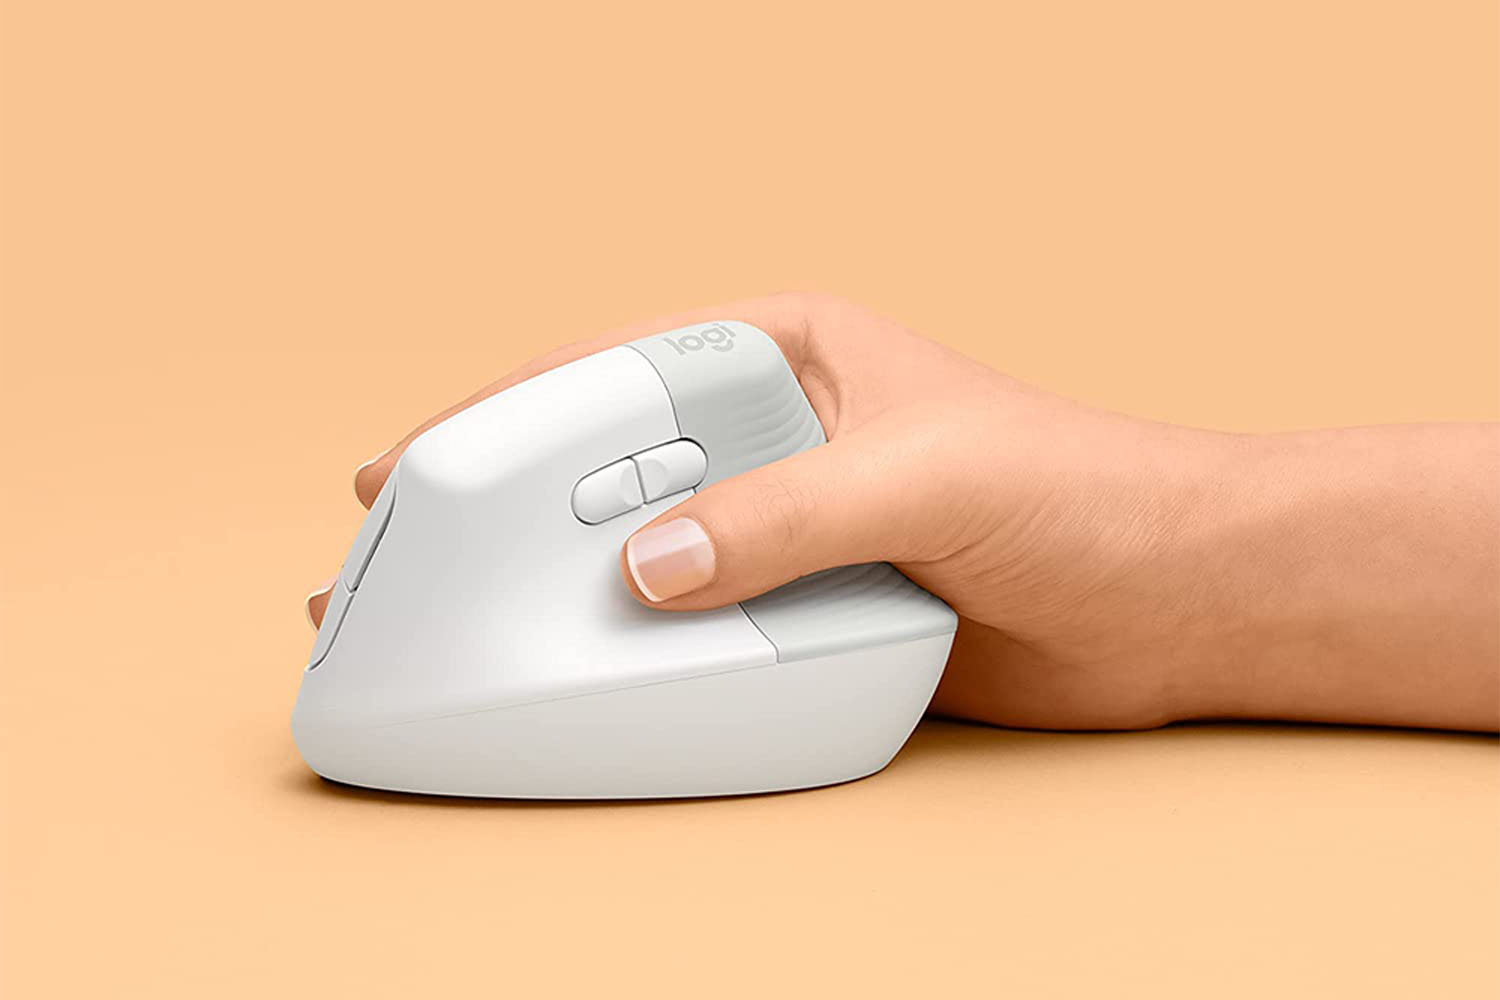 a hand holding a Logitech mouse